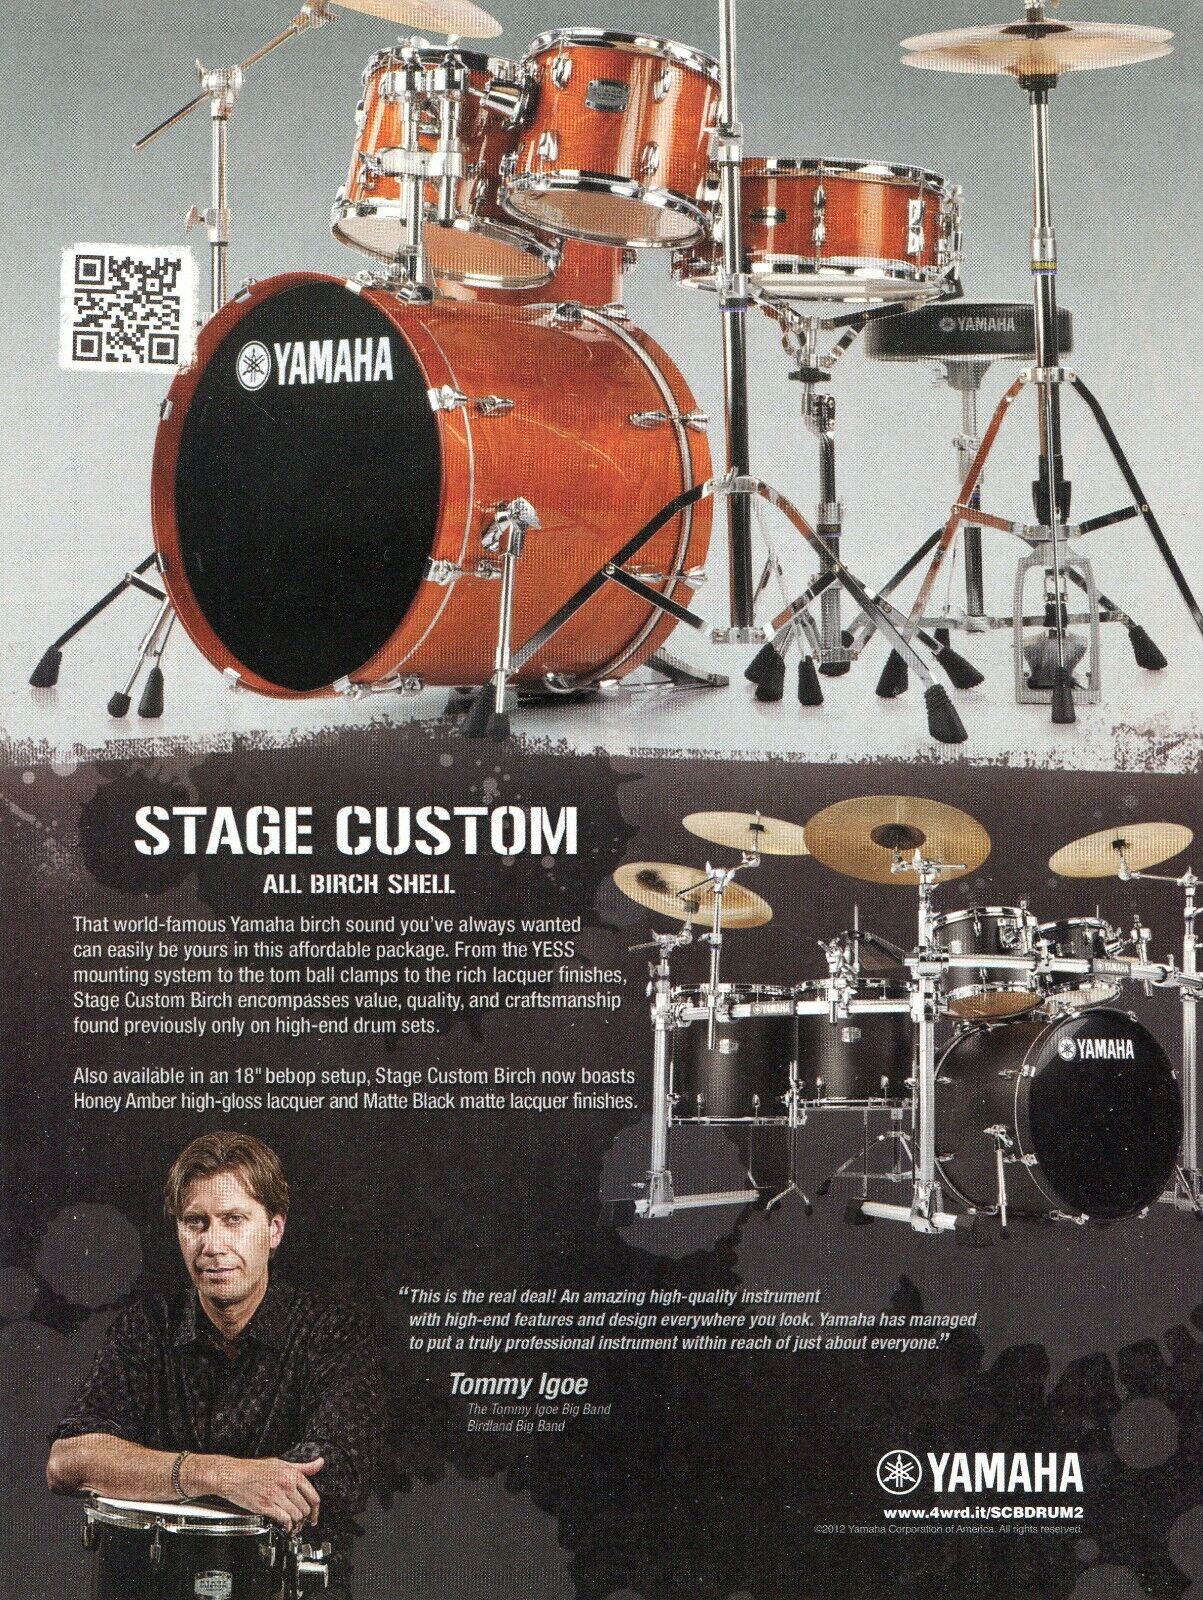 2012 Print Ad of Yamaha Stage Custom Birch w Tommy Igoe Birdland Big Band